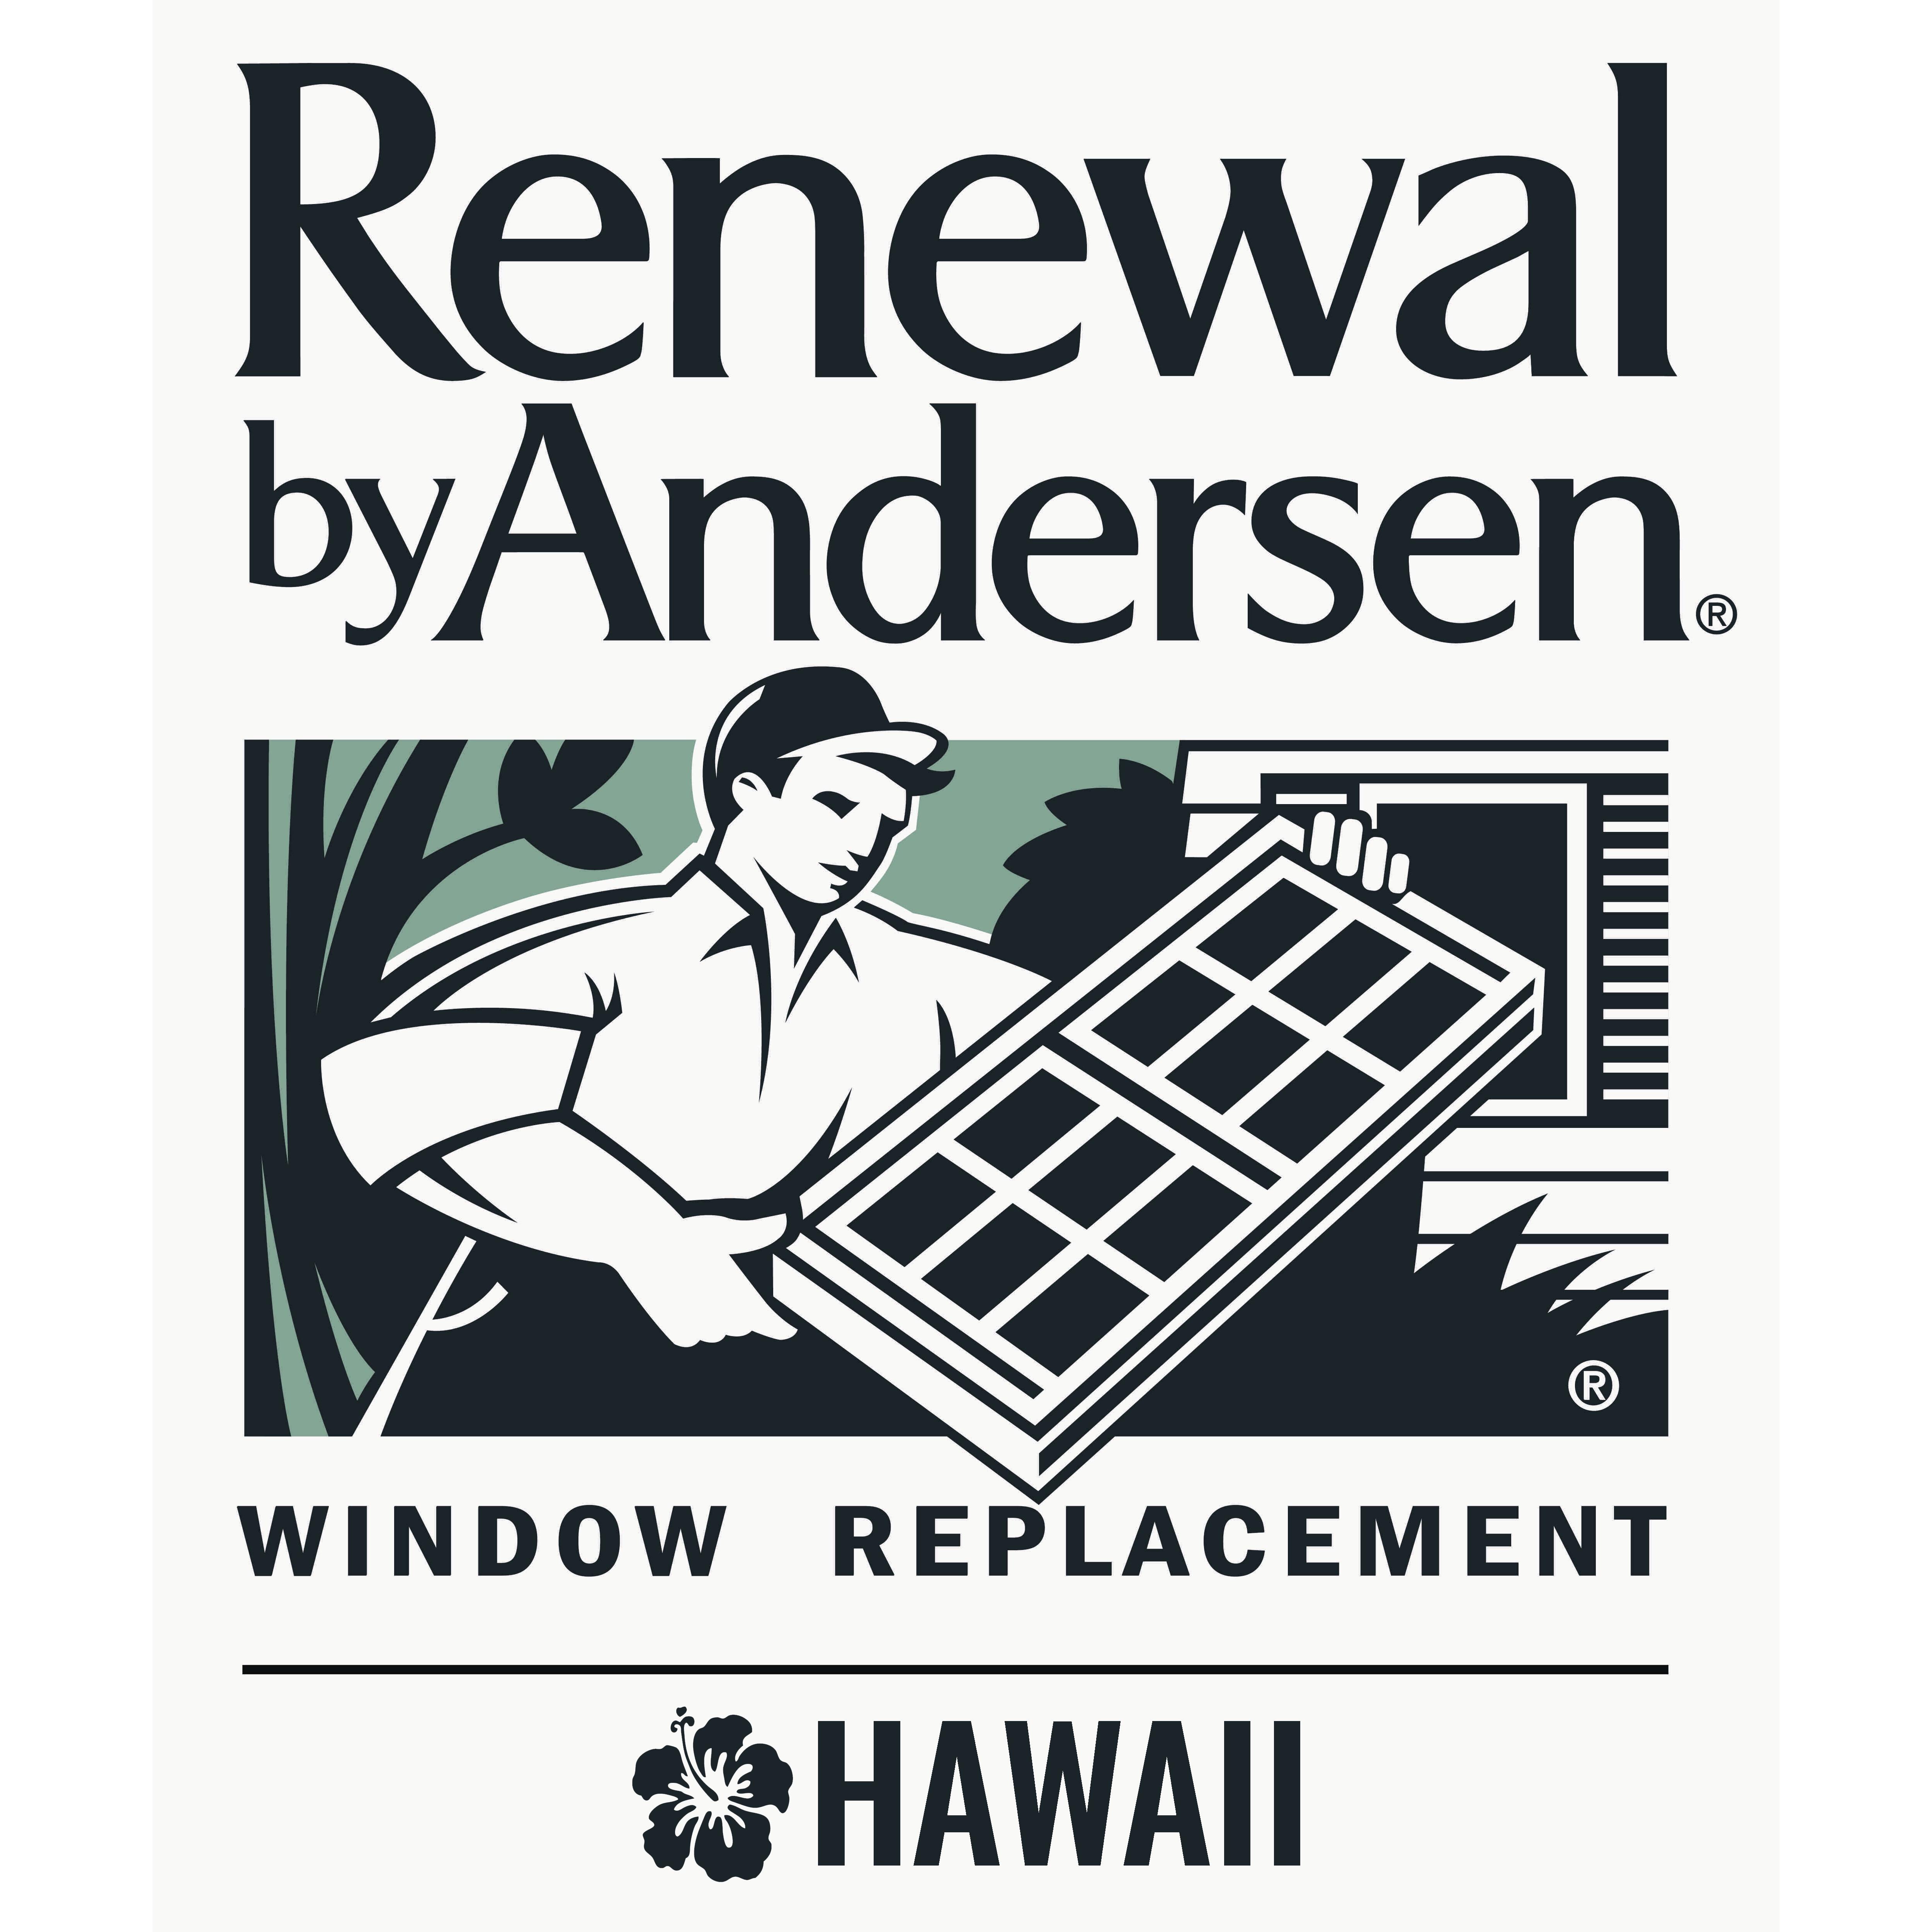 Renewal by Andersen Hawaii Logo